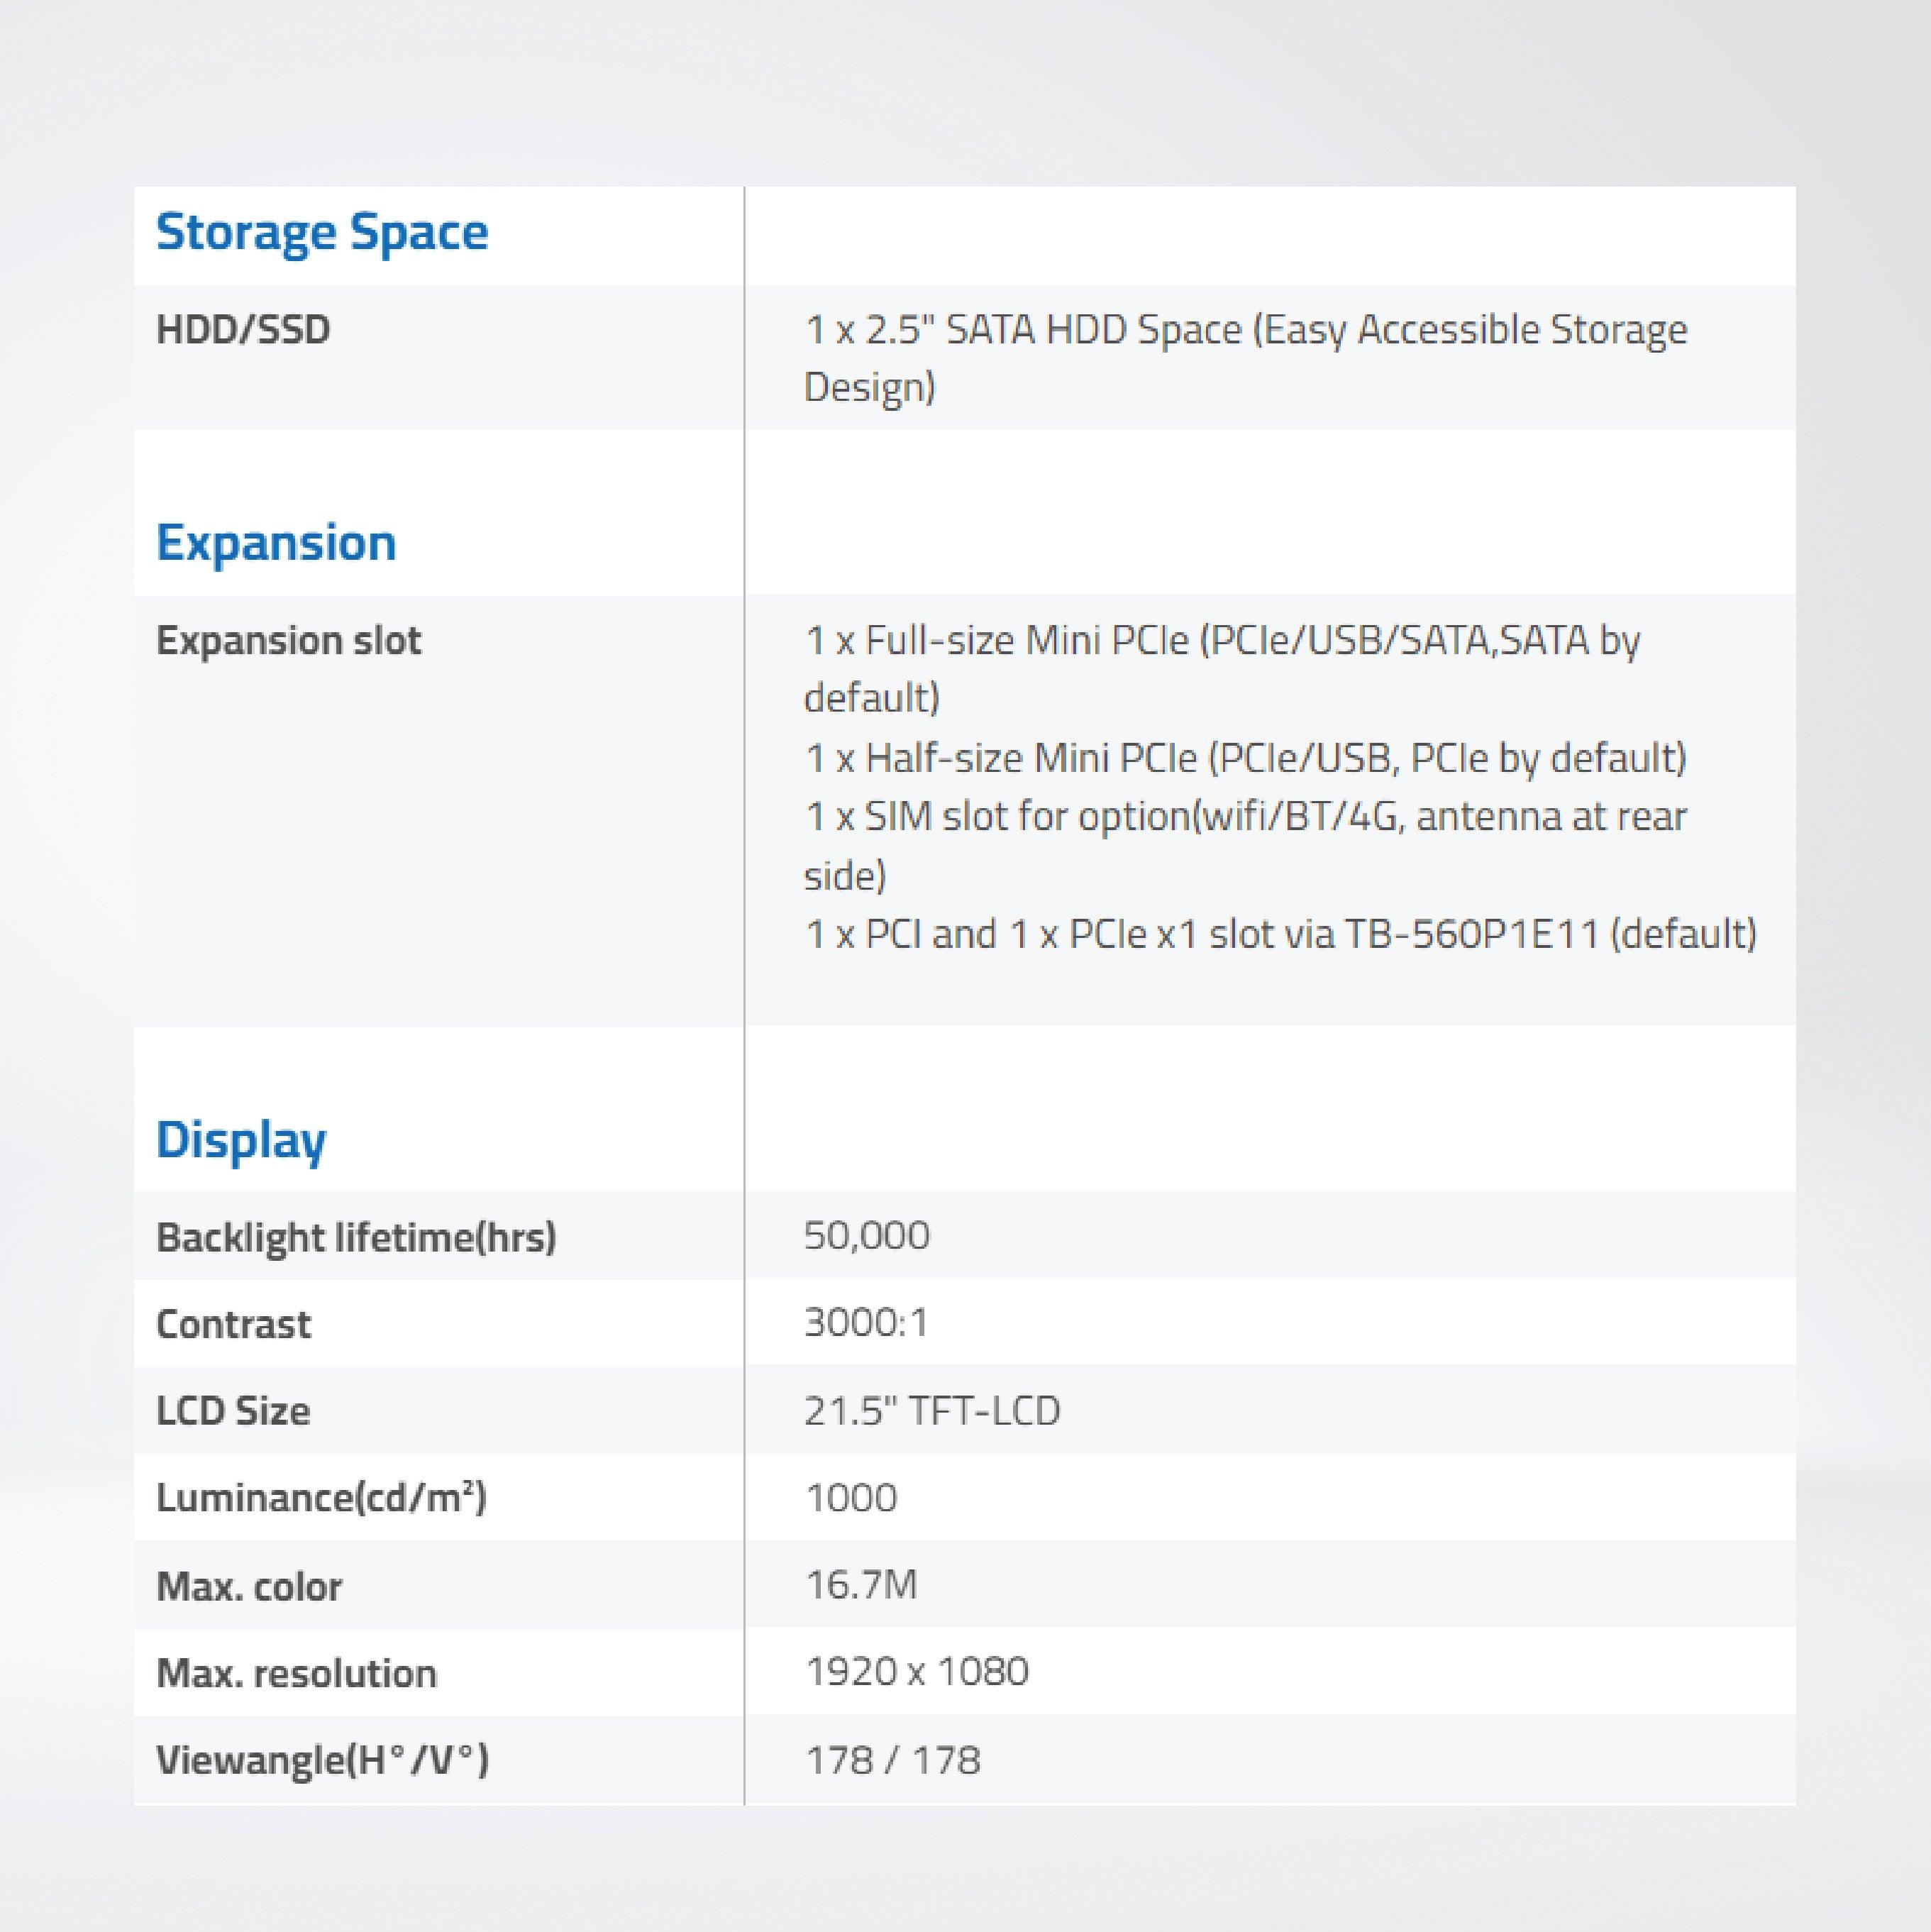 ViPAC-821GH 21.5” Intel Celeron N2930 Fanless Expandable Panel PC - Riverplus